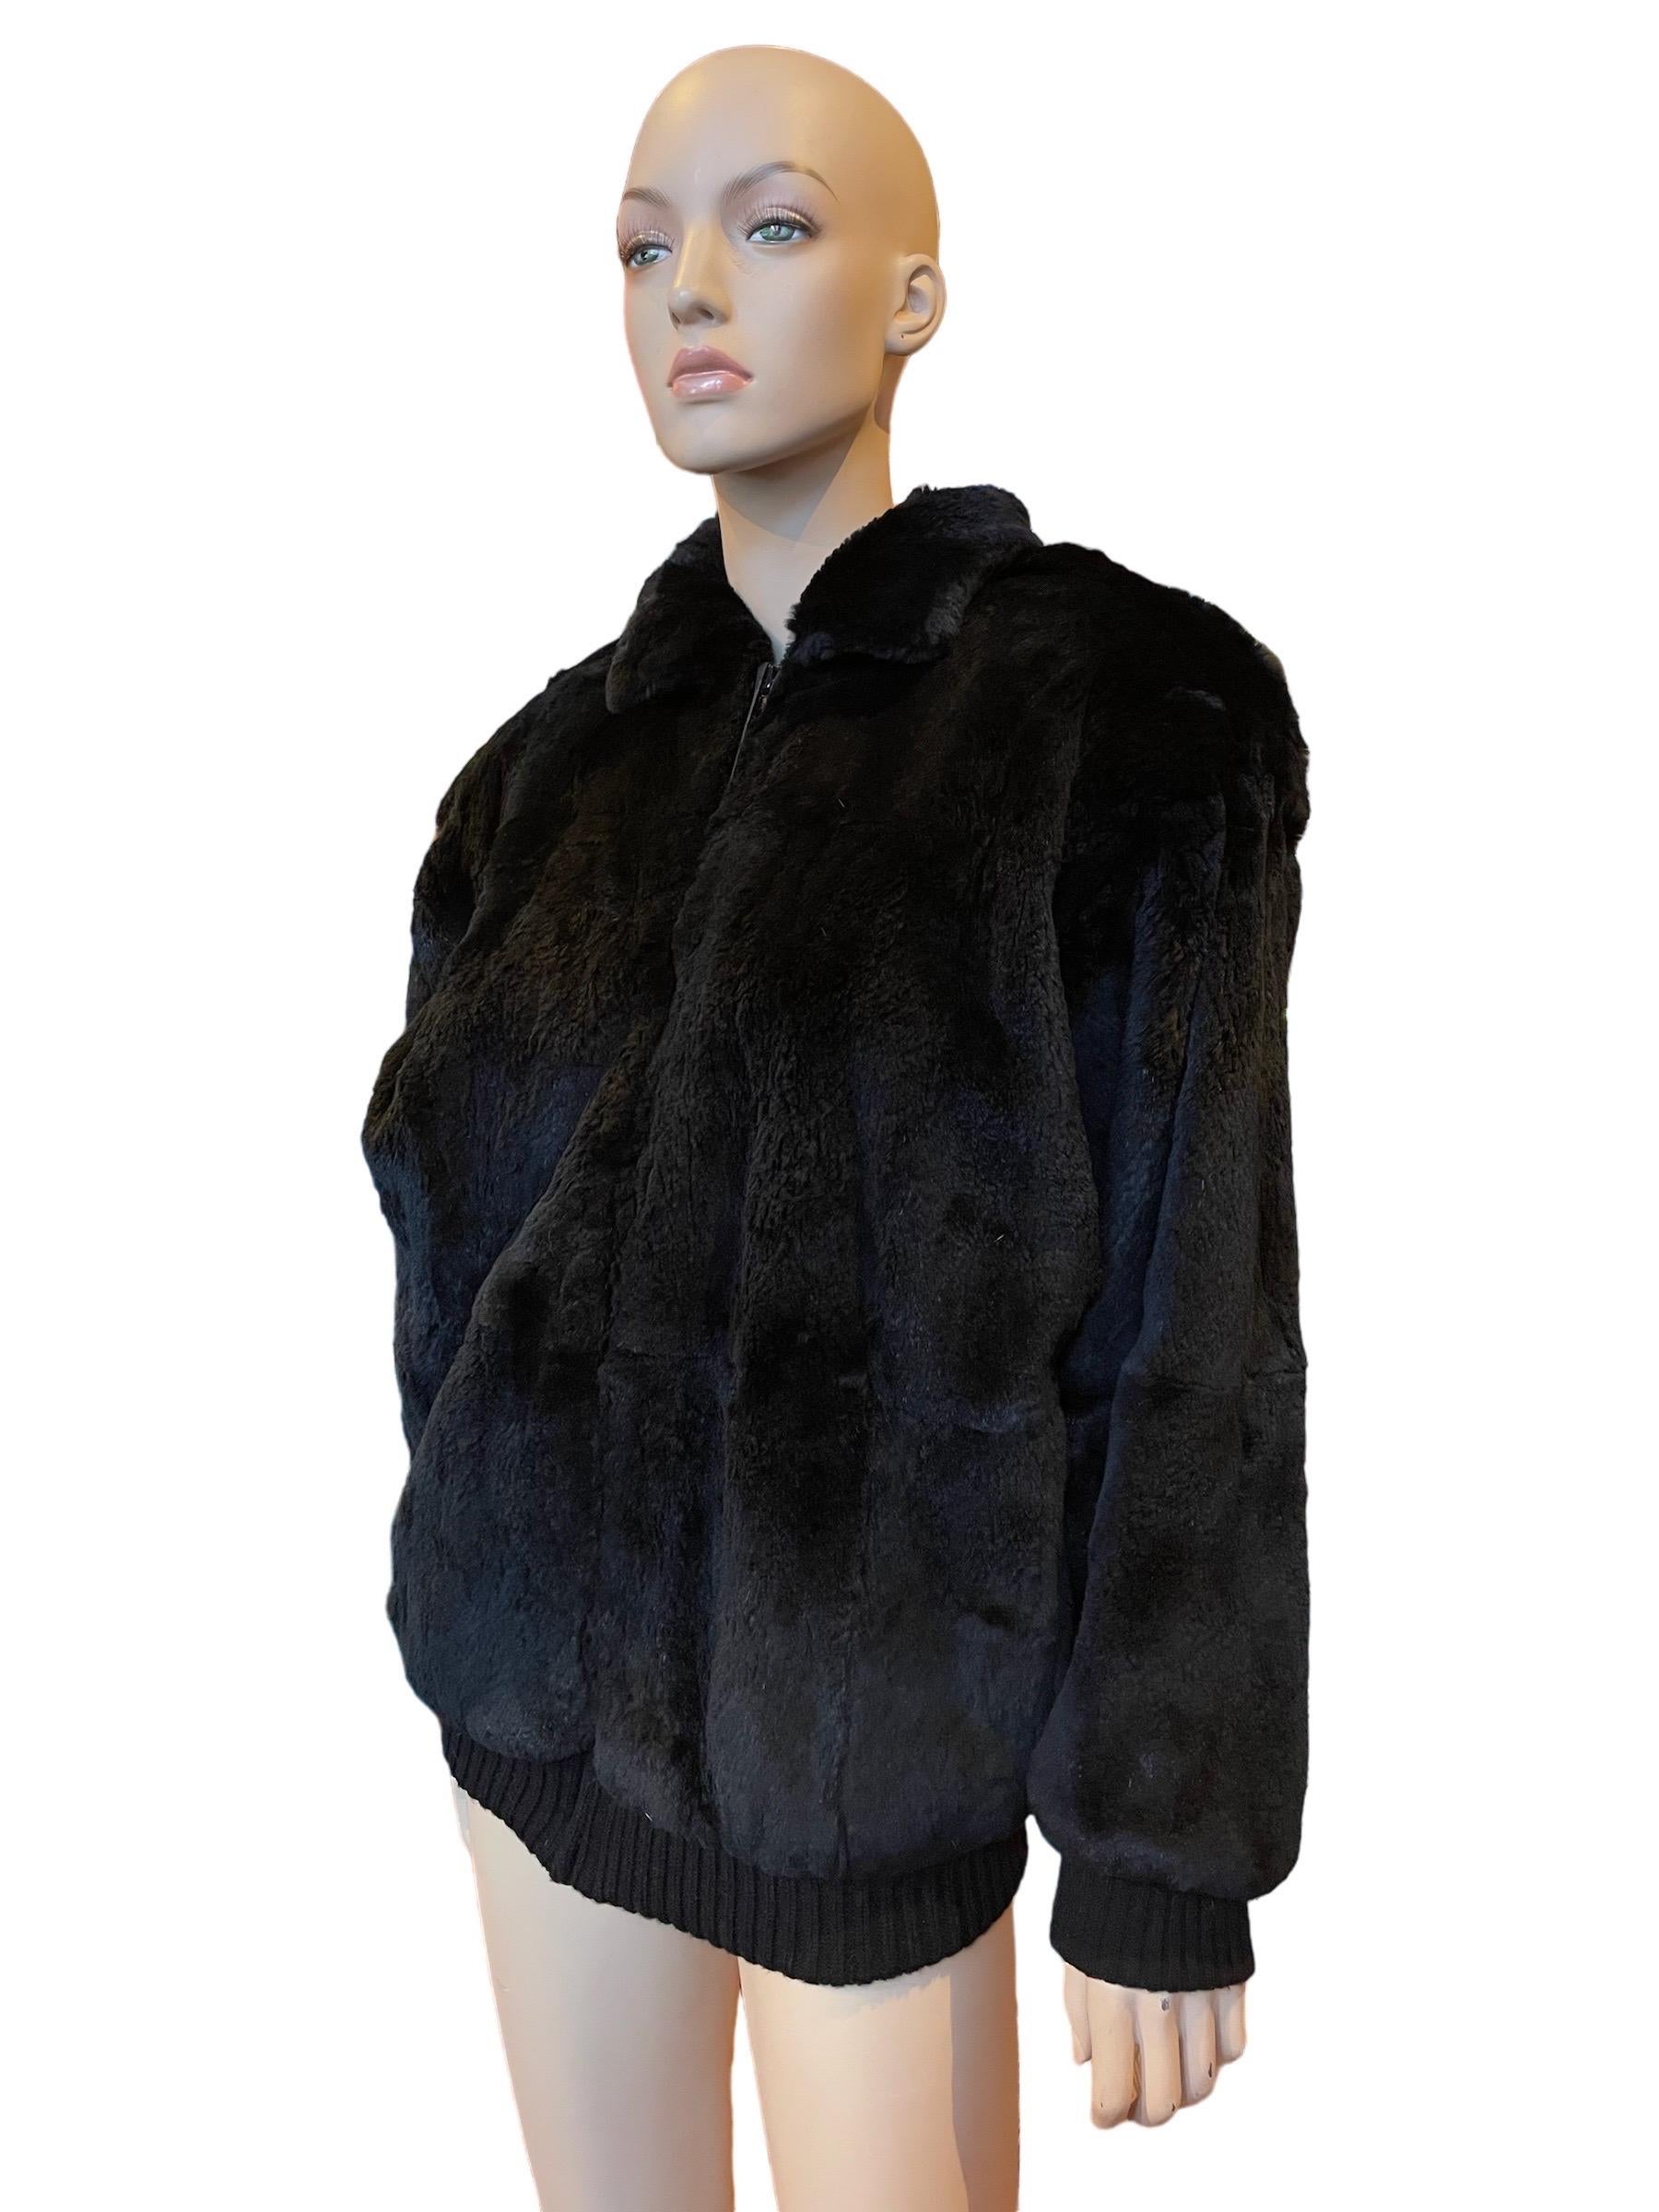 1980s Soft Black Fur Zip up Jacket 

An amazing 1980s zip up fur jacket. Super soft black fur, with shoulder pads. 

